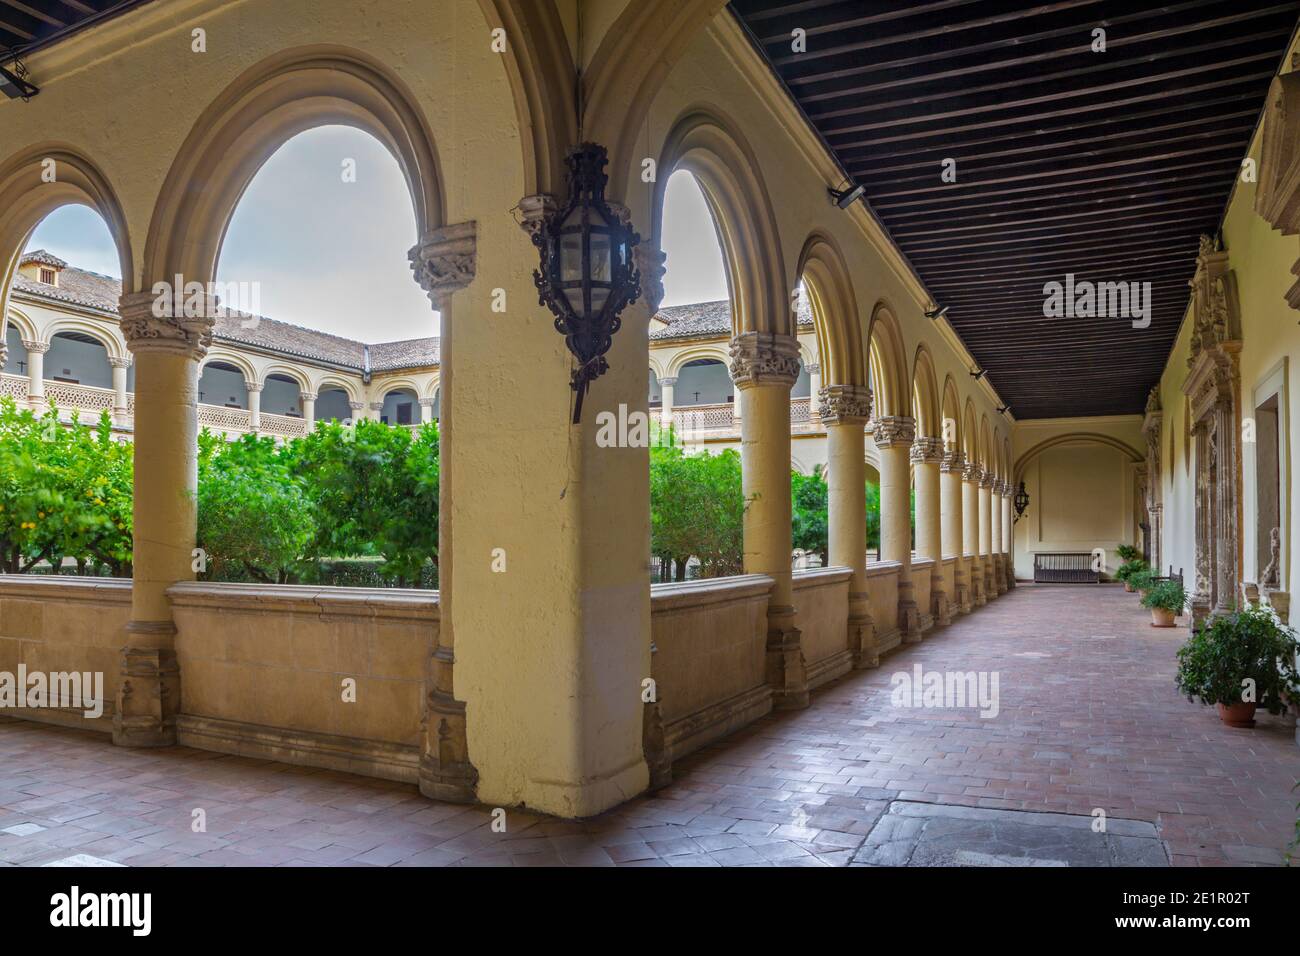 GRANADA, SPAIN - MAY 29, 2015: The atrium of church Monasterio de San Jeronimo. Stock Photo